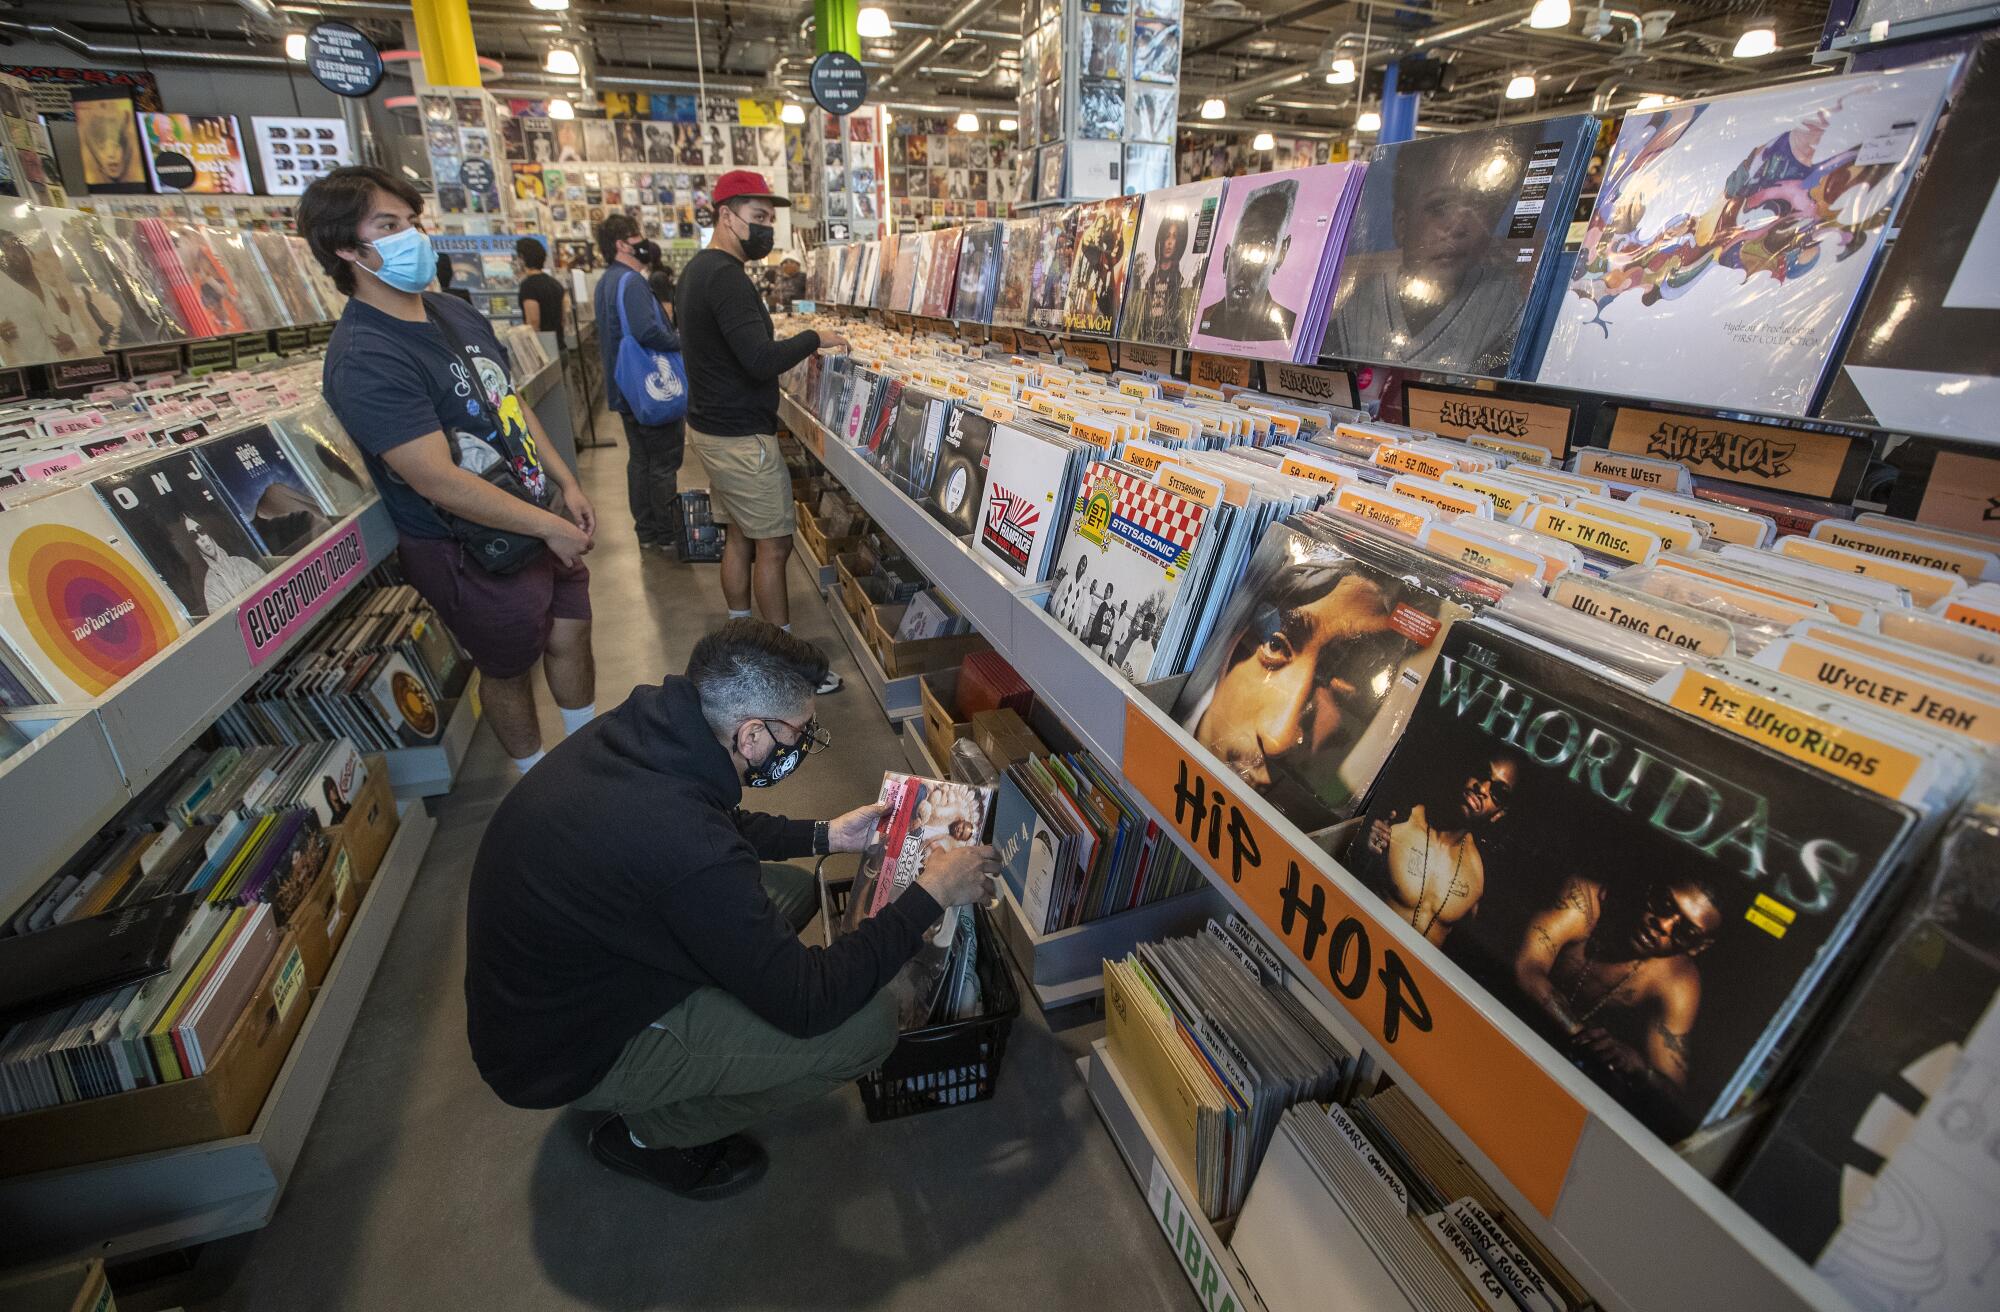  Customers browse albums at Amoeba Music.